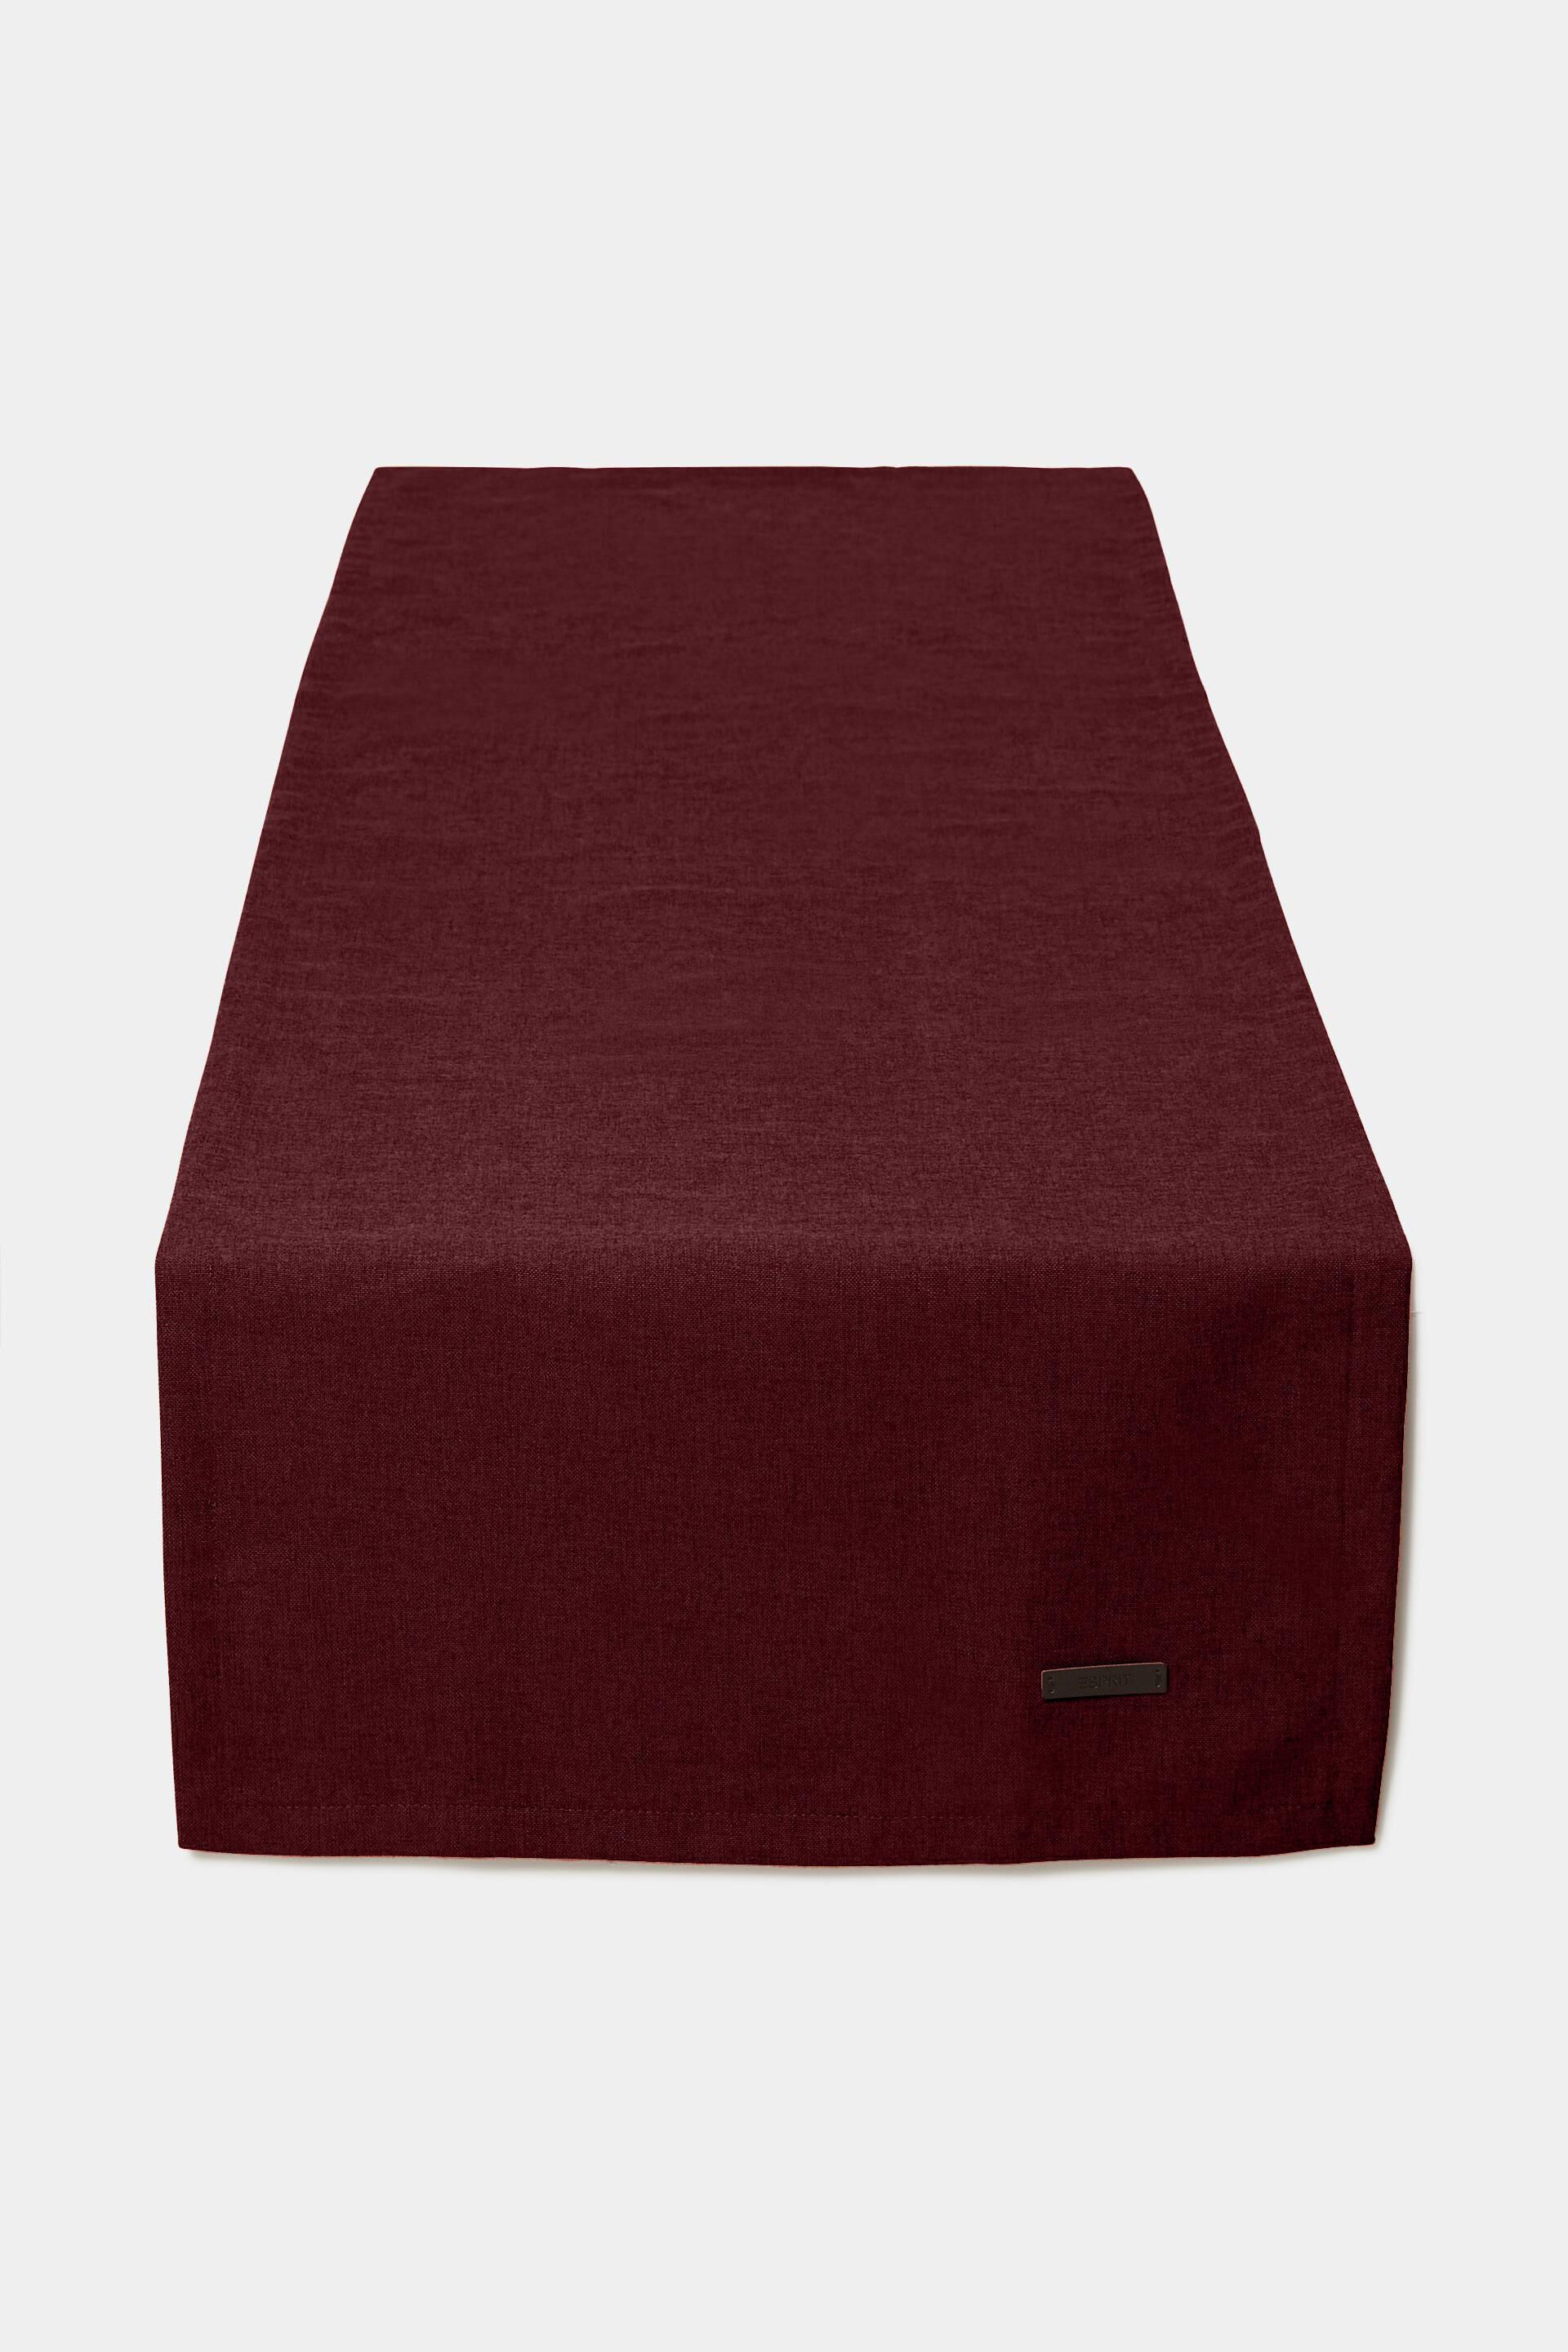 Esprit woven in runner fabric Table melange